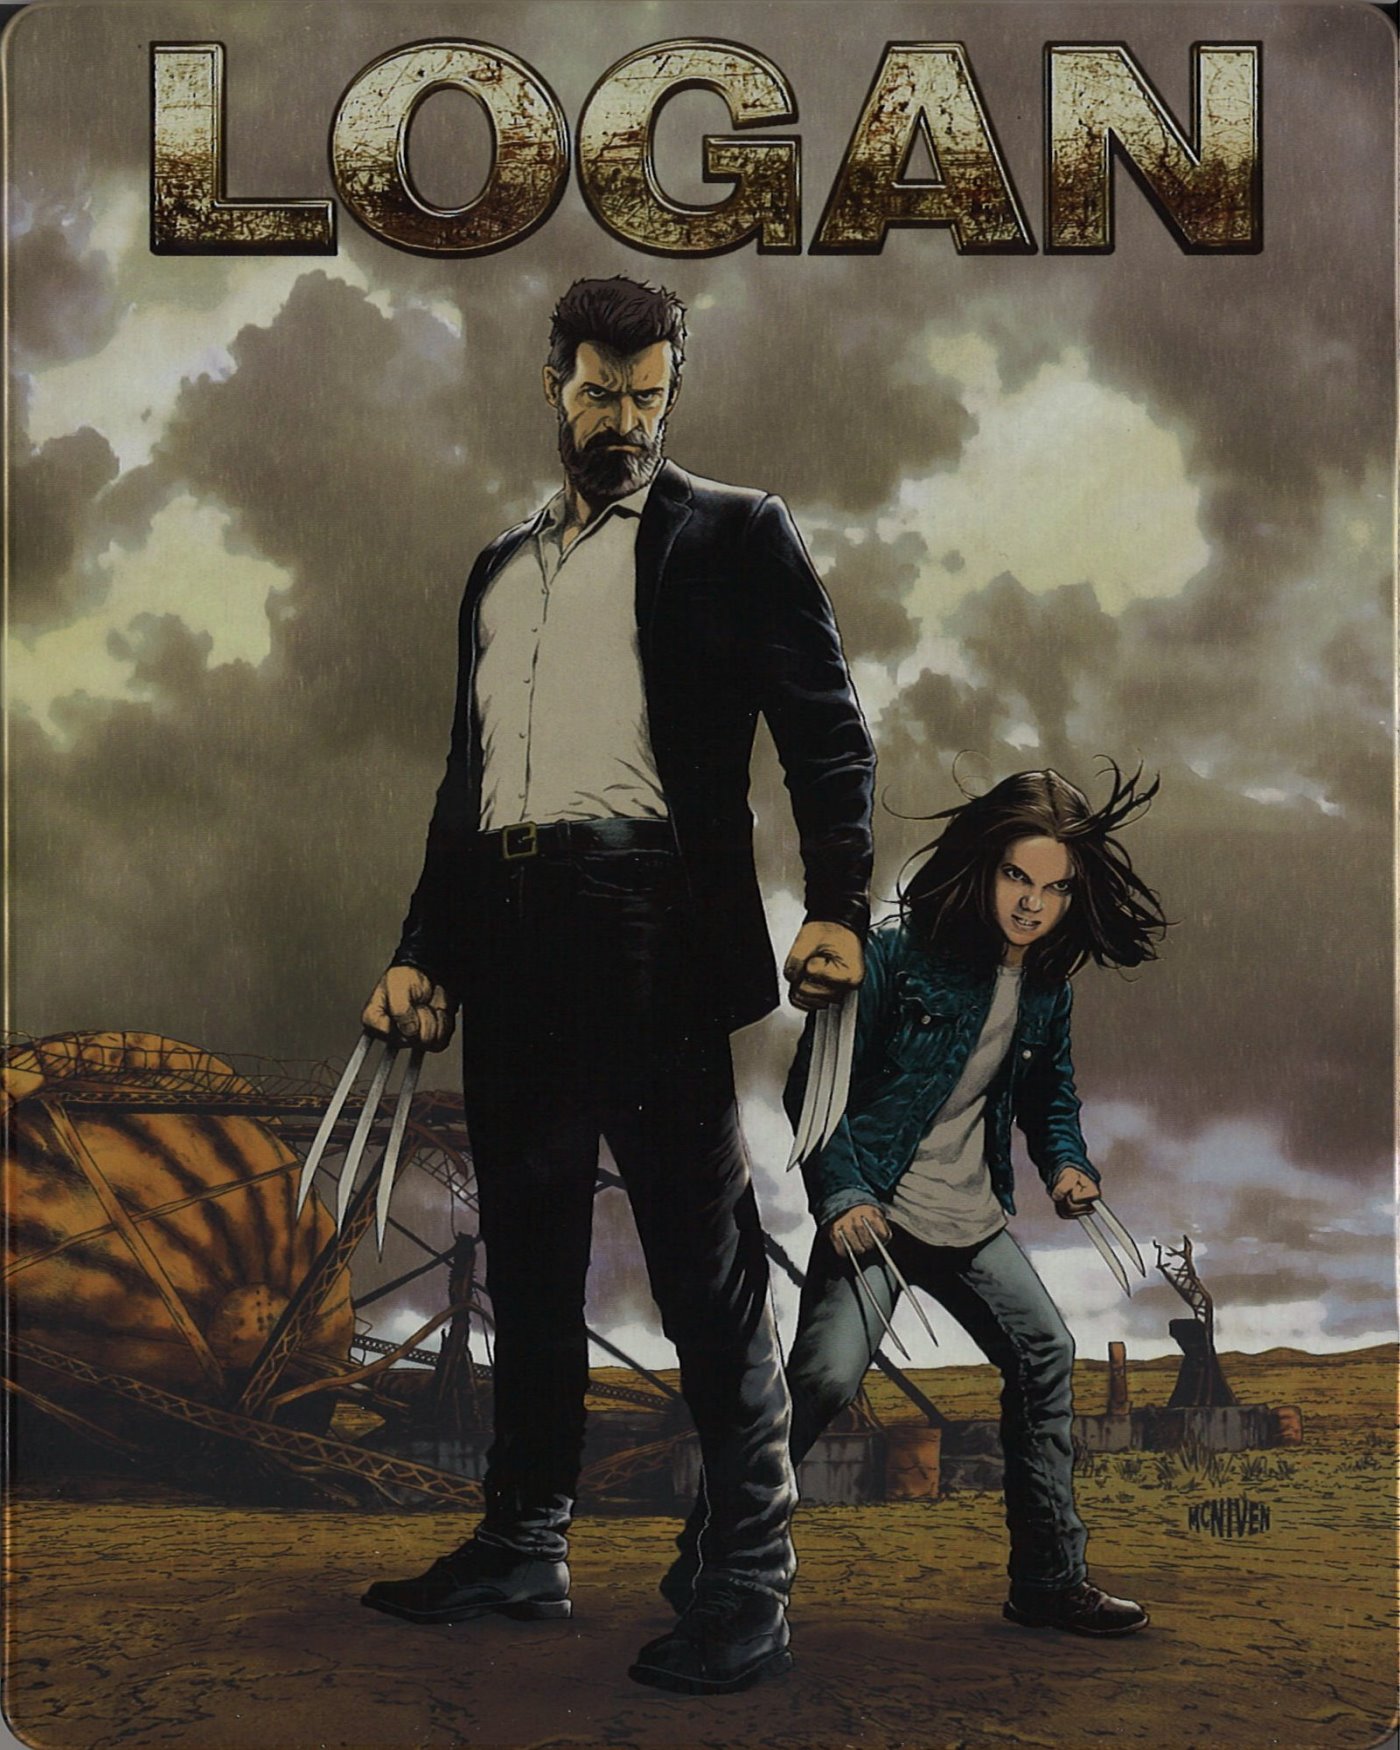 Cover - Logan - The Wolverine.jpg